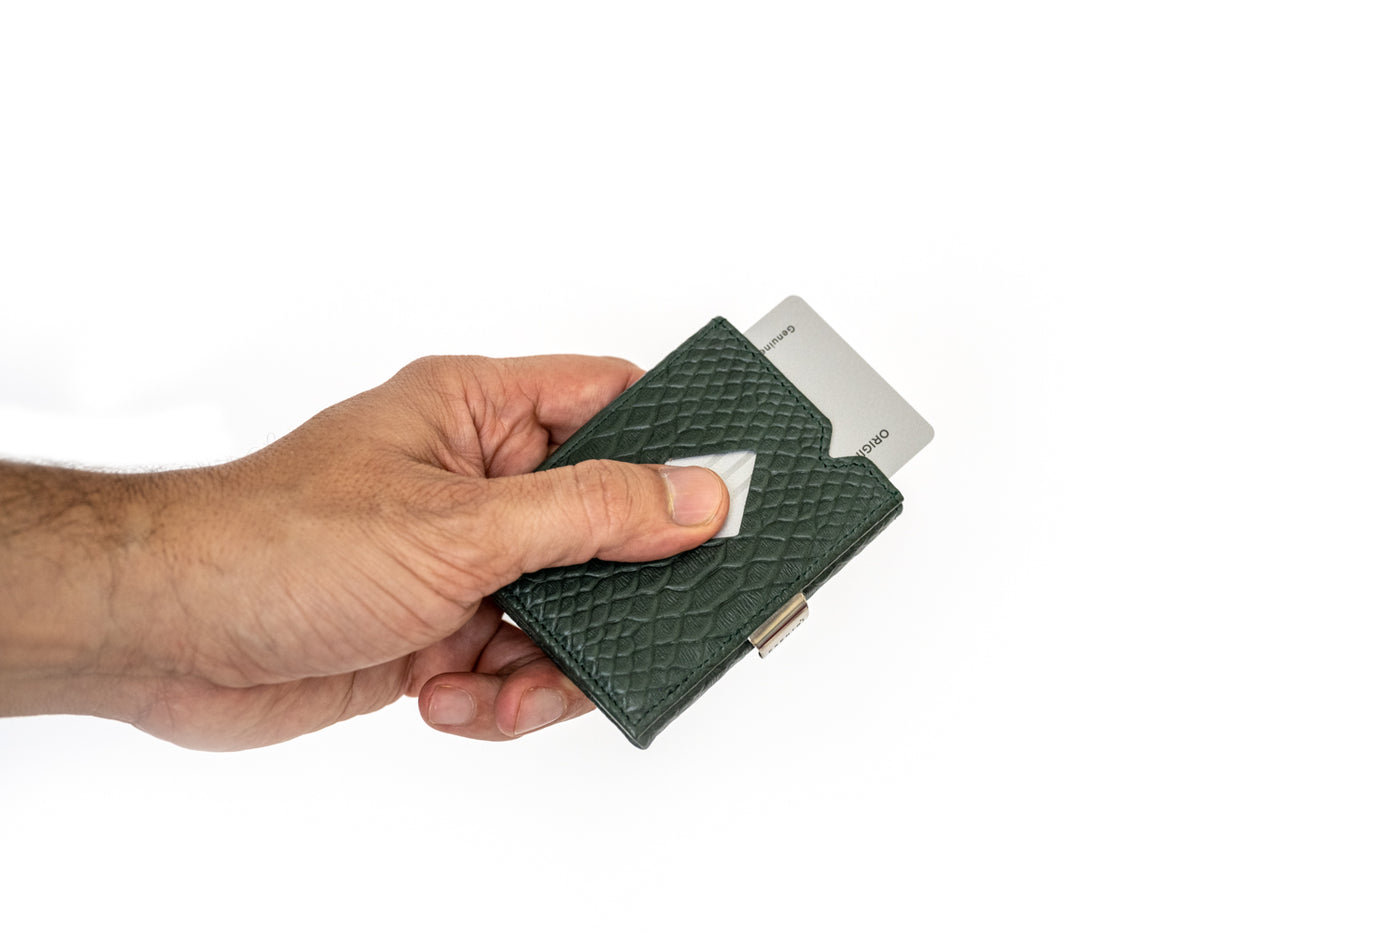 Porte-cartes portefeuille vert Cobra avec protection RFID